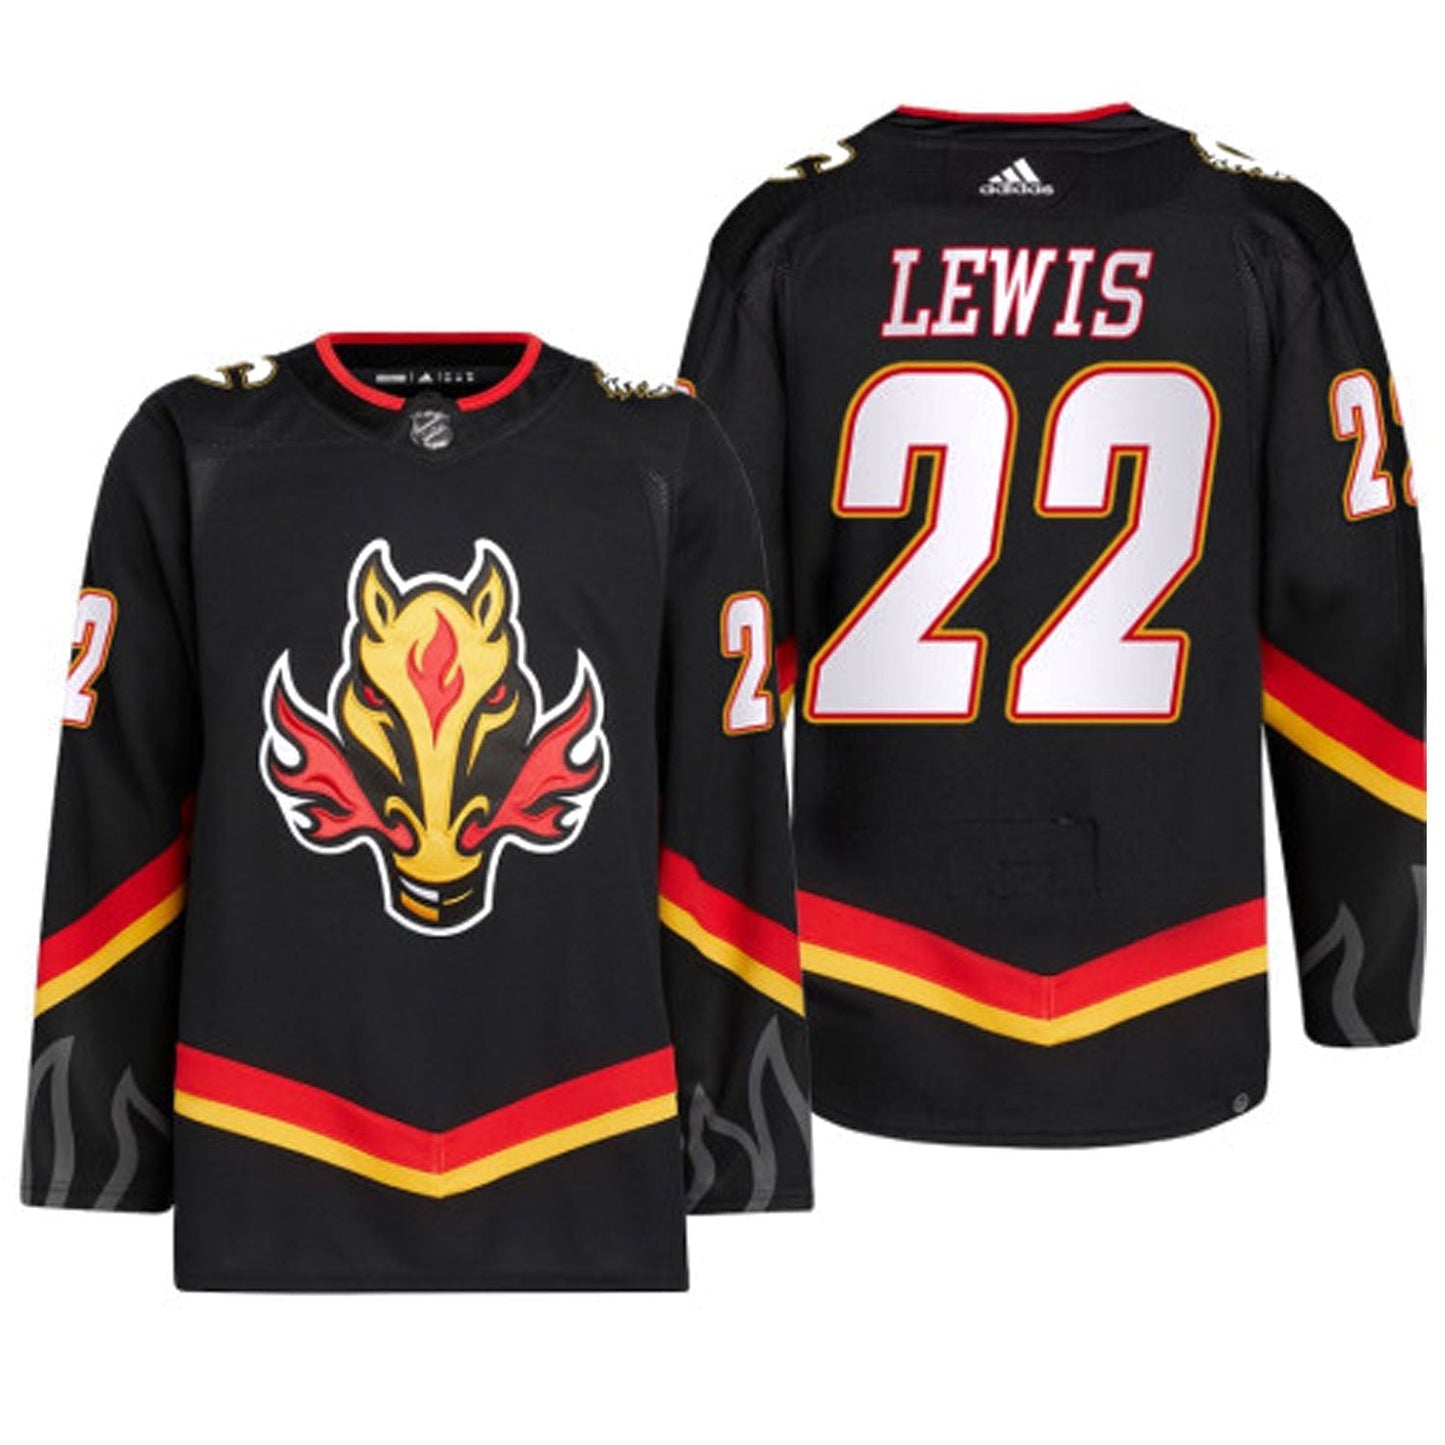 NHL Trevor Lewis Calgary Flames 22 Jersey